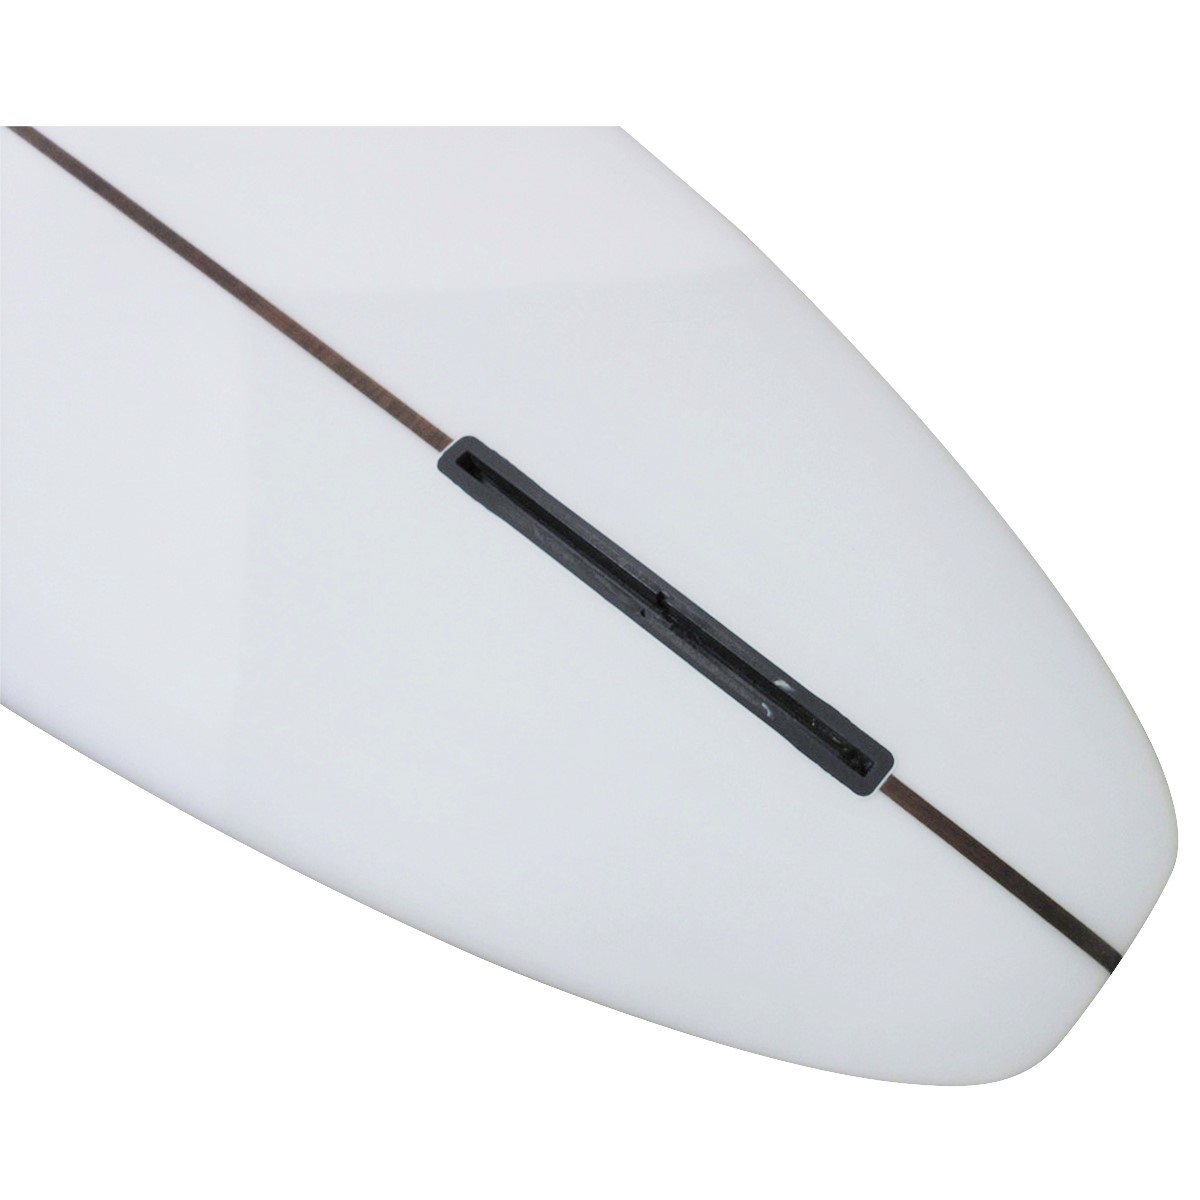 ARENAL SURFBOARDS / Standard 9`2